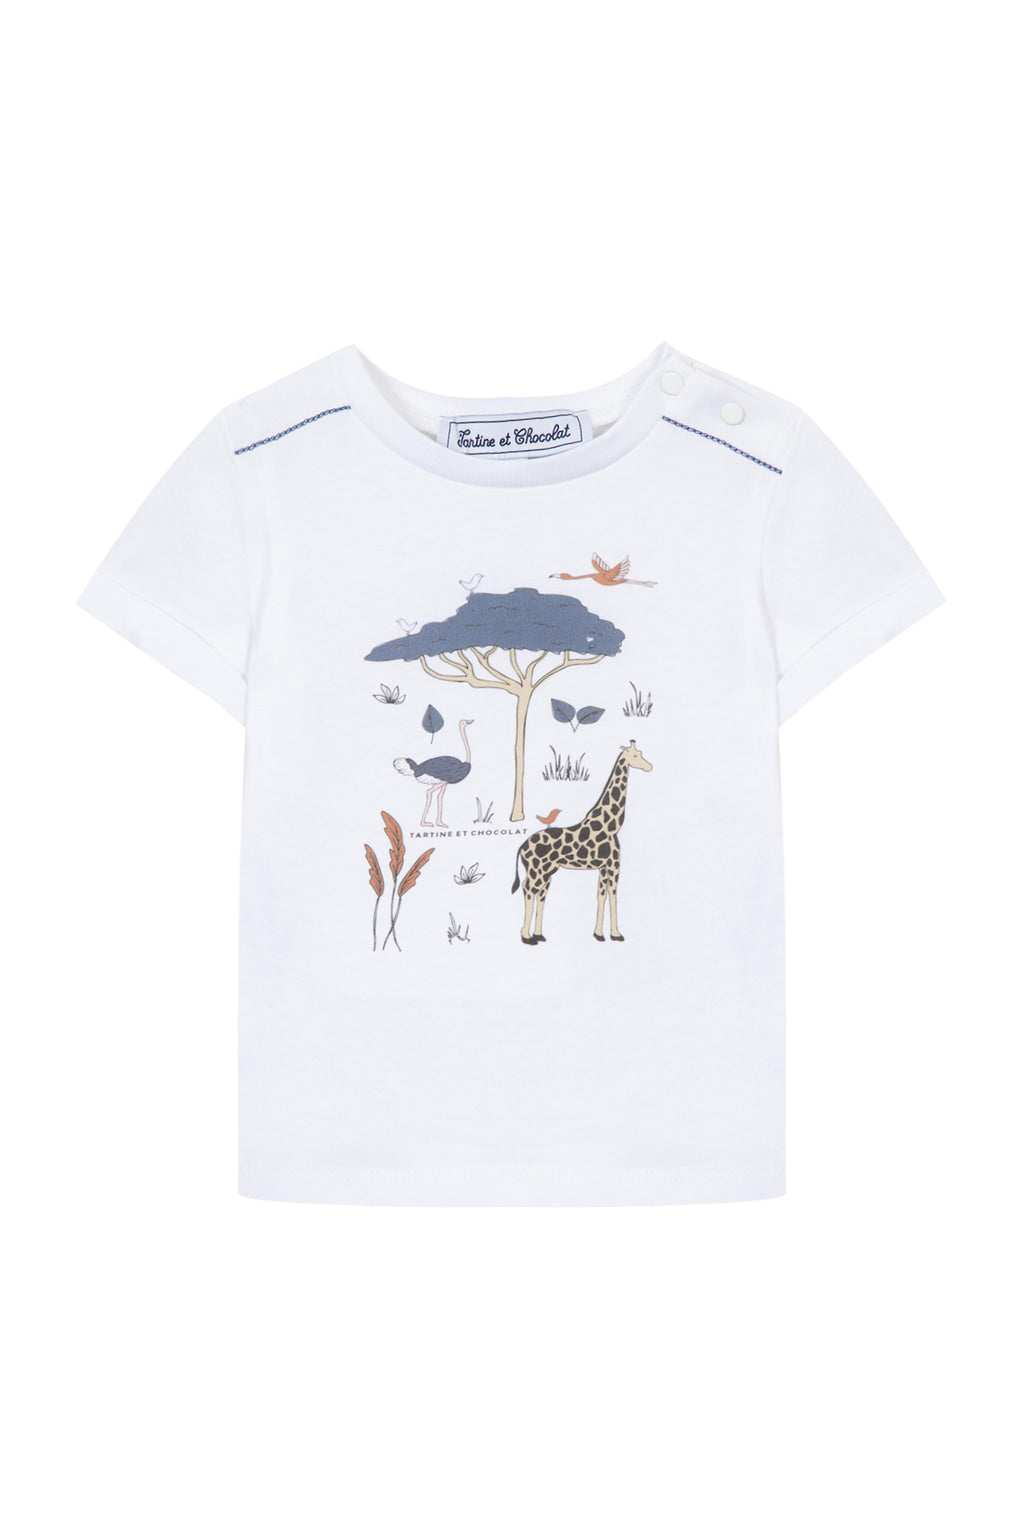 T -Shirt - Weiss  Illustration wilde Tiere